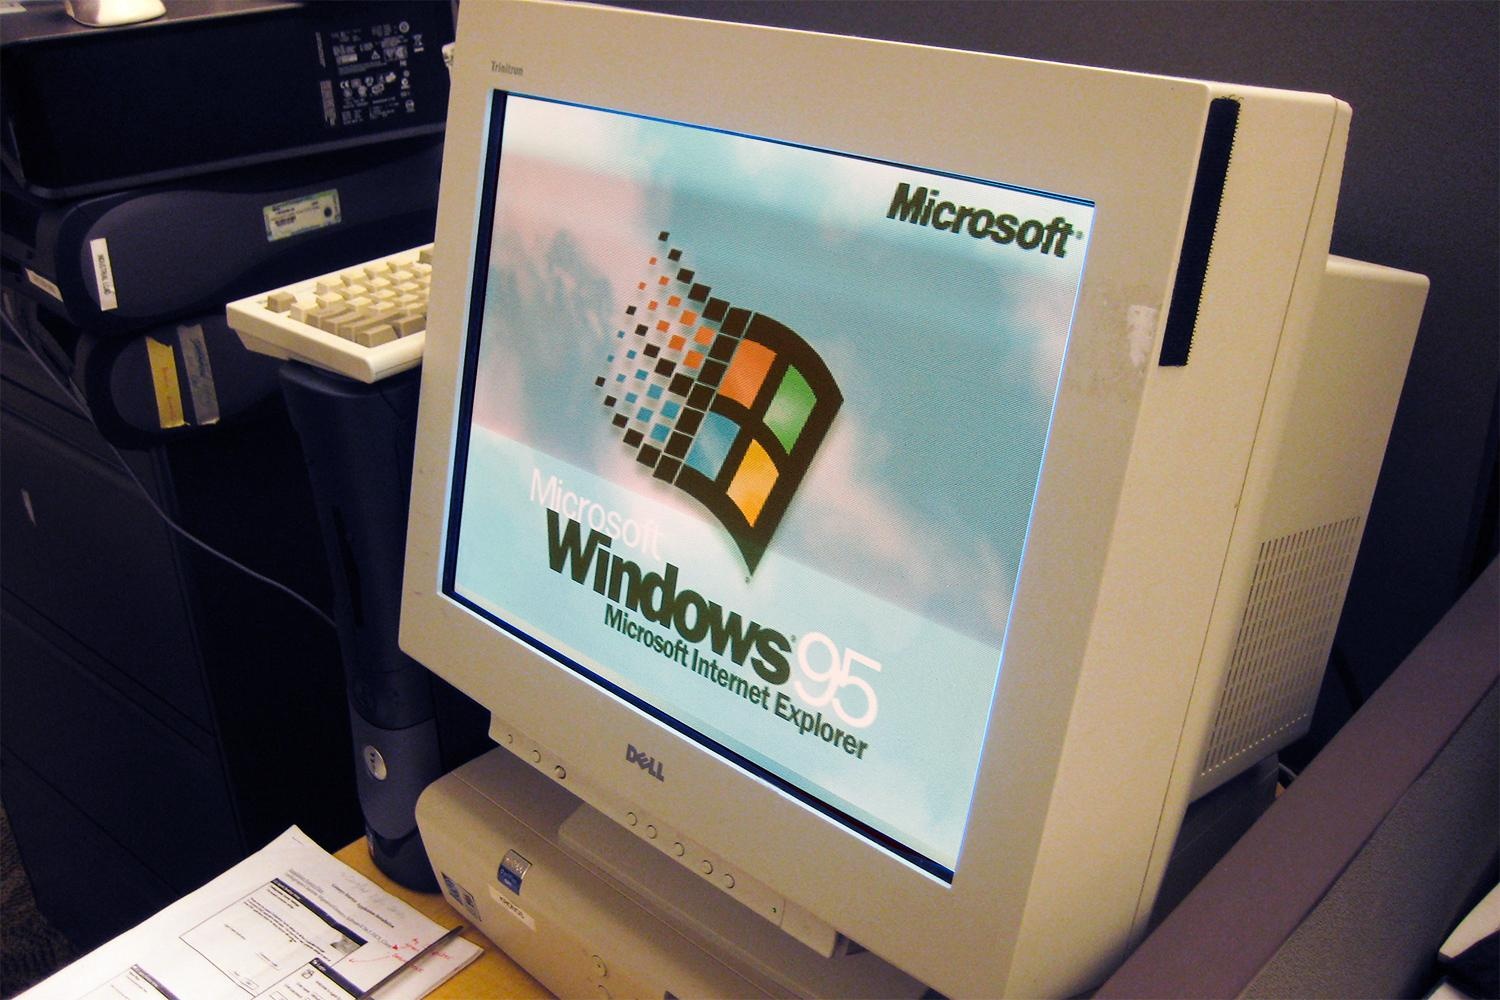 Le schede in Explorer sono state testate in Windows 95